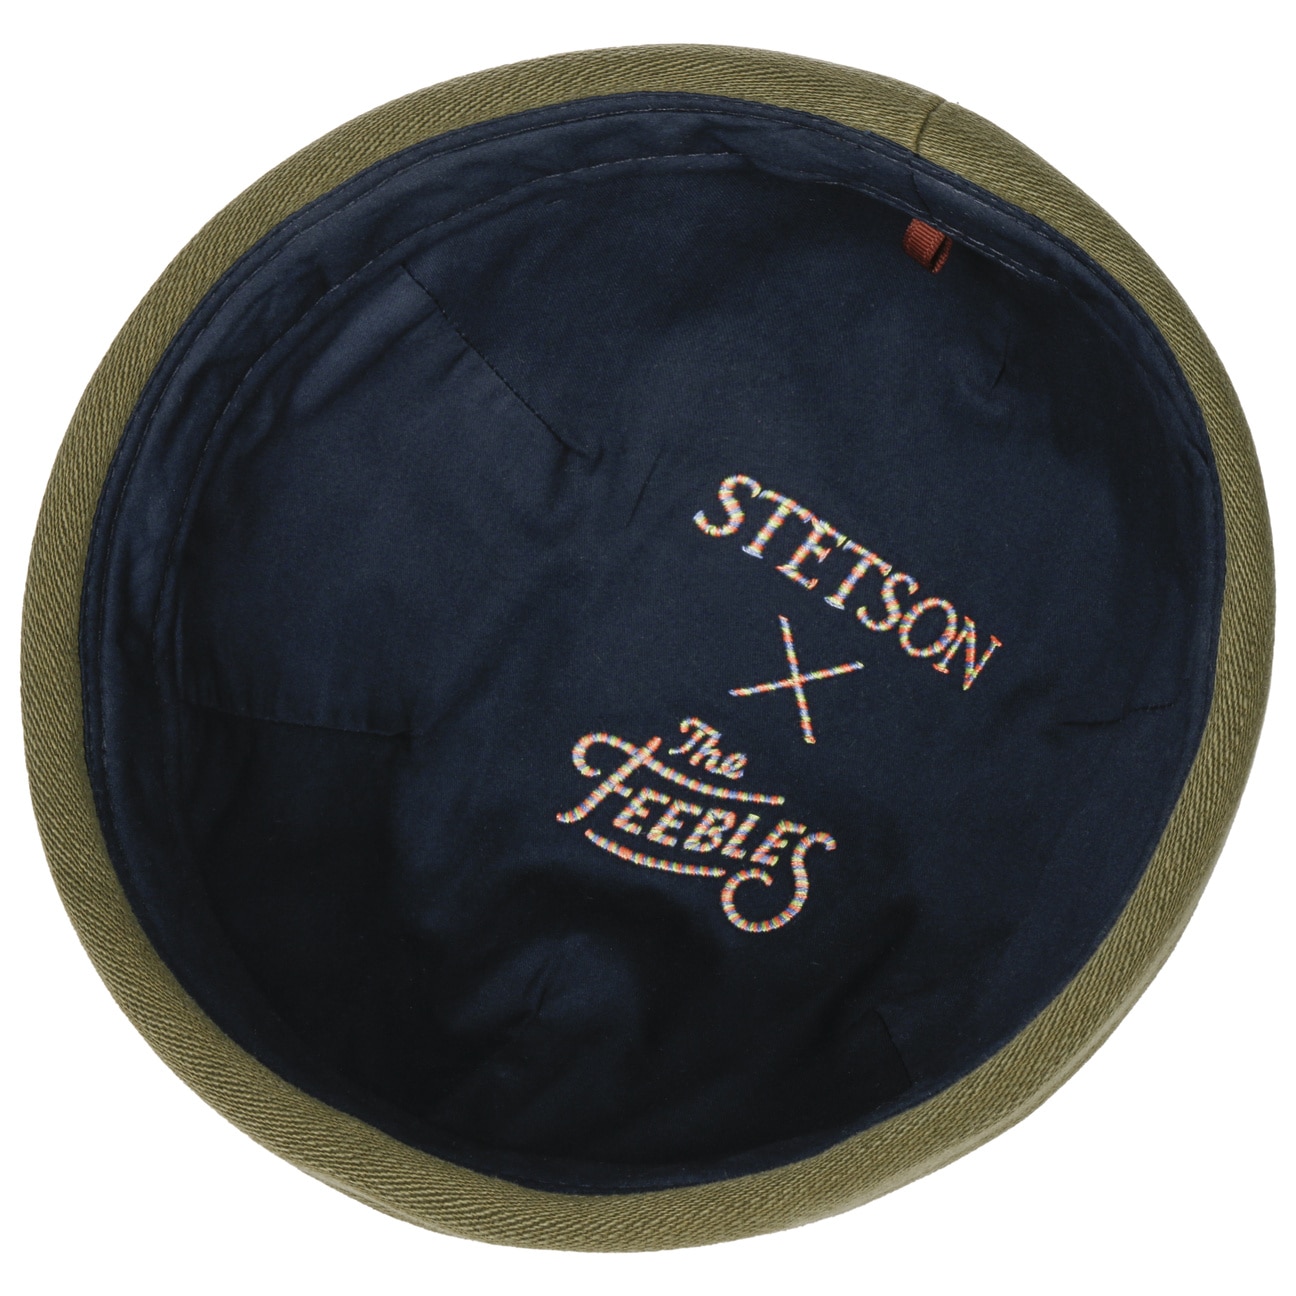 Stetson Jacquard x The Feebles Docker Hat Blue XXL (62-63 cm)